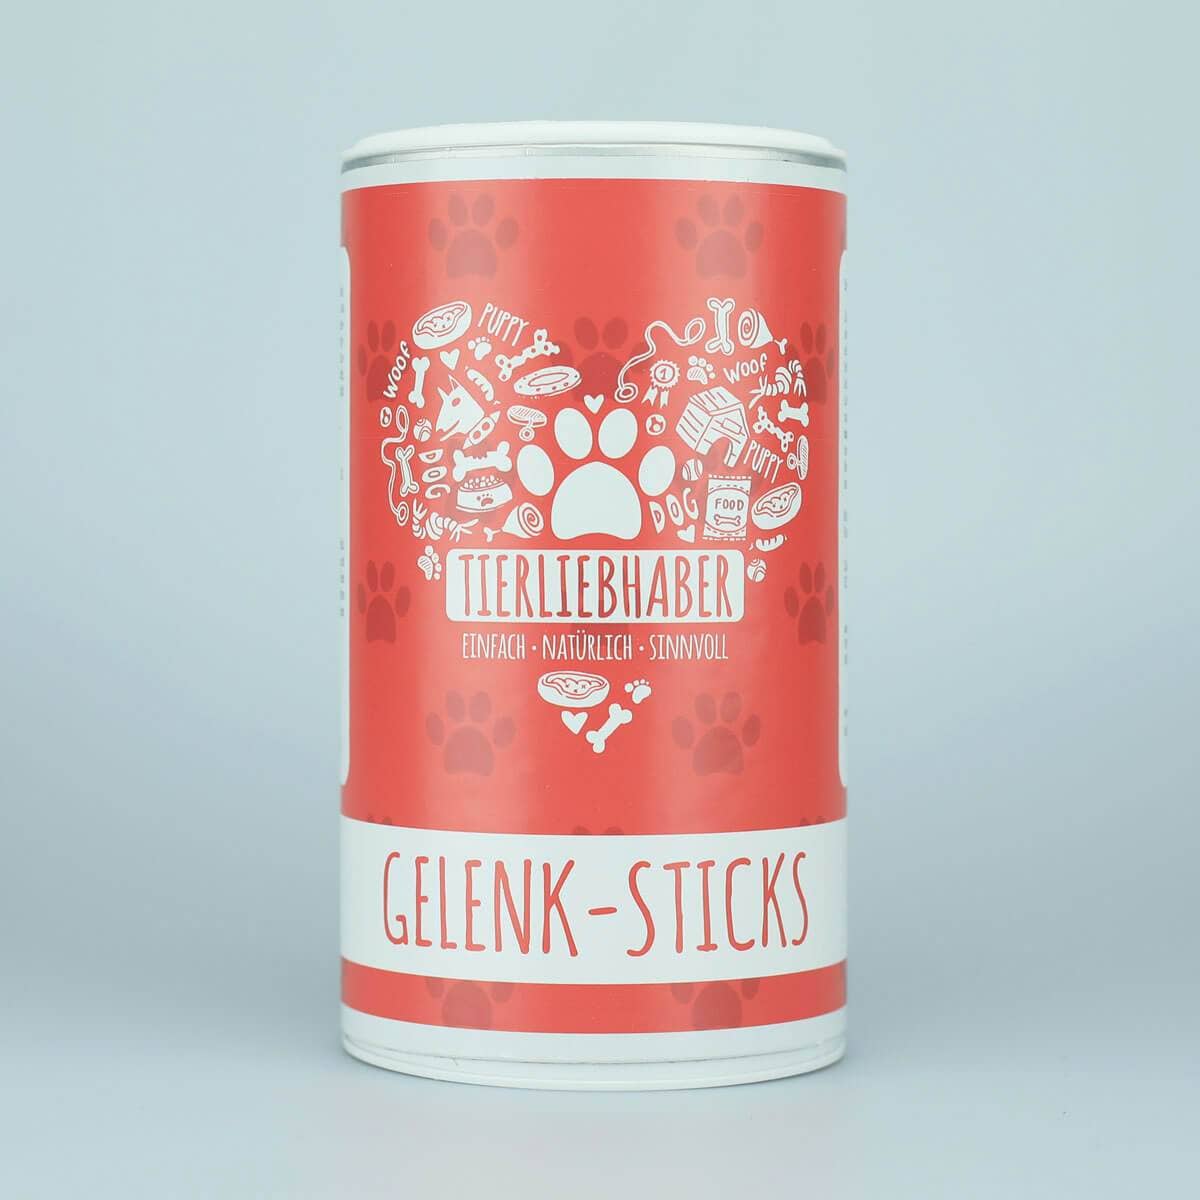 Gelenk Sticks - Sticks for joints